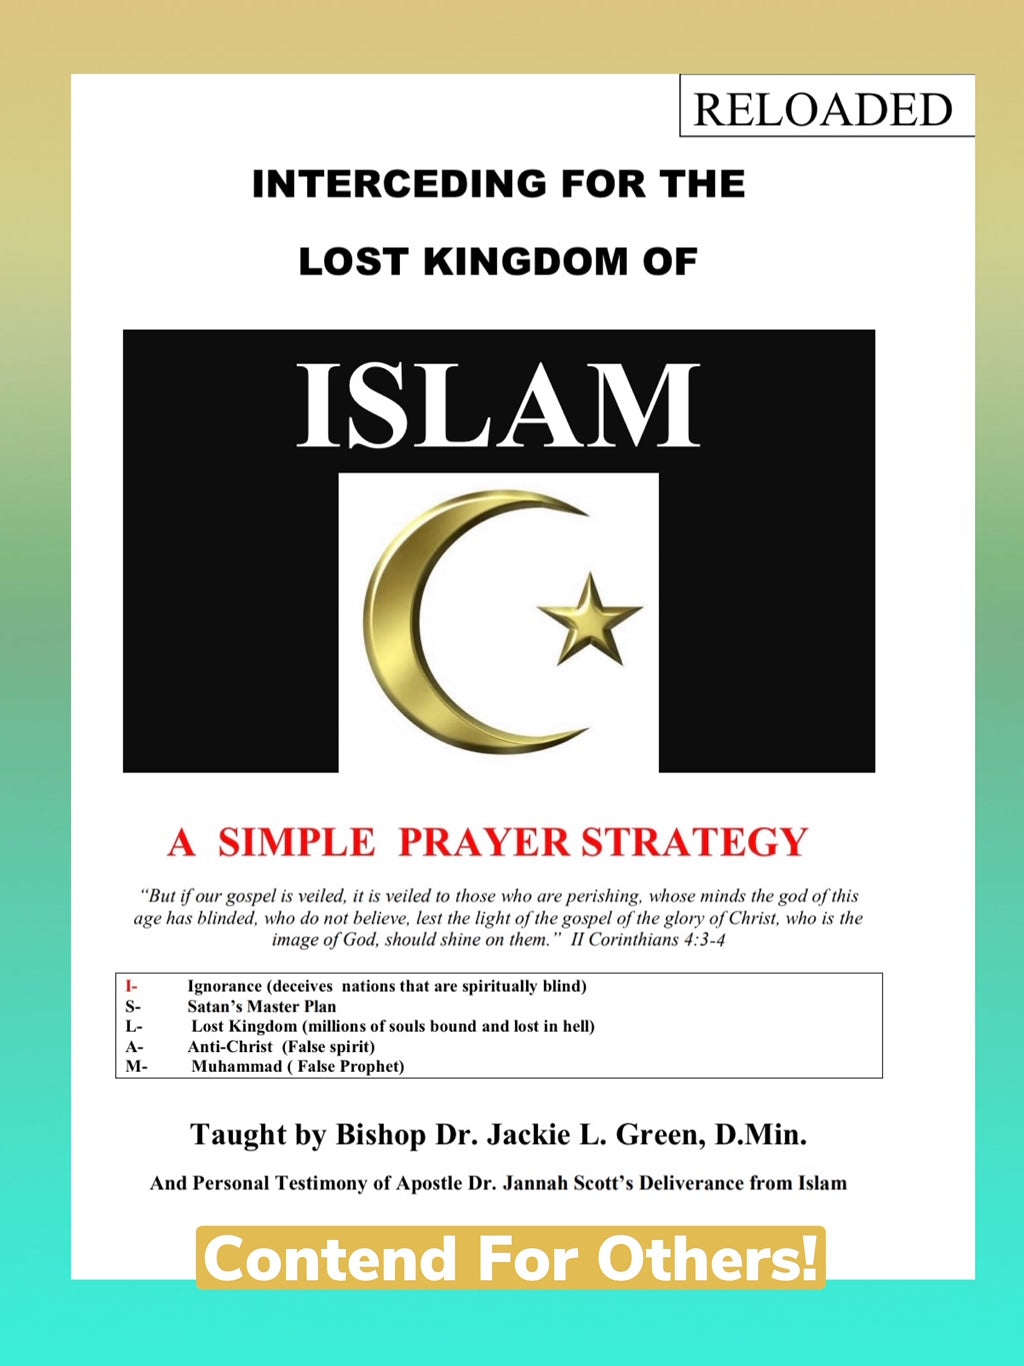 INTERCEDING FOR THE LOST KINGDOM OF ISLAM